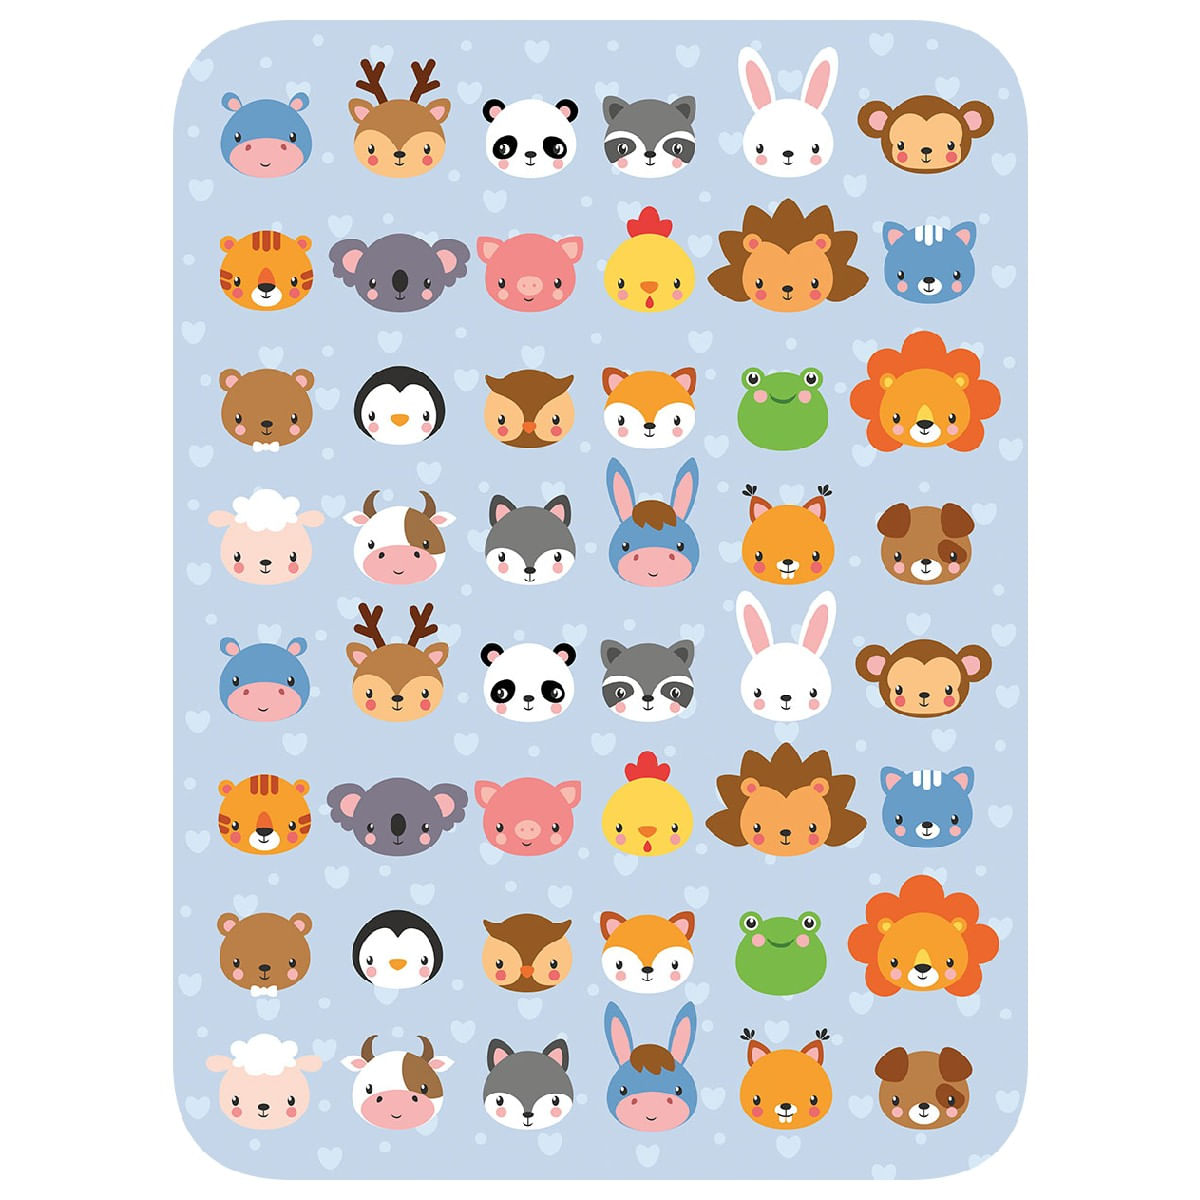 98 melhor ideia de Animais kawaii  animais kawaii, kawaii, kawaii desenhos  fofos